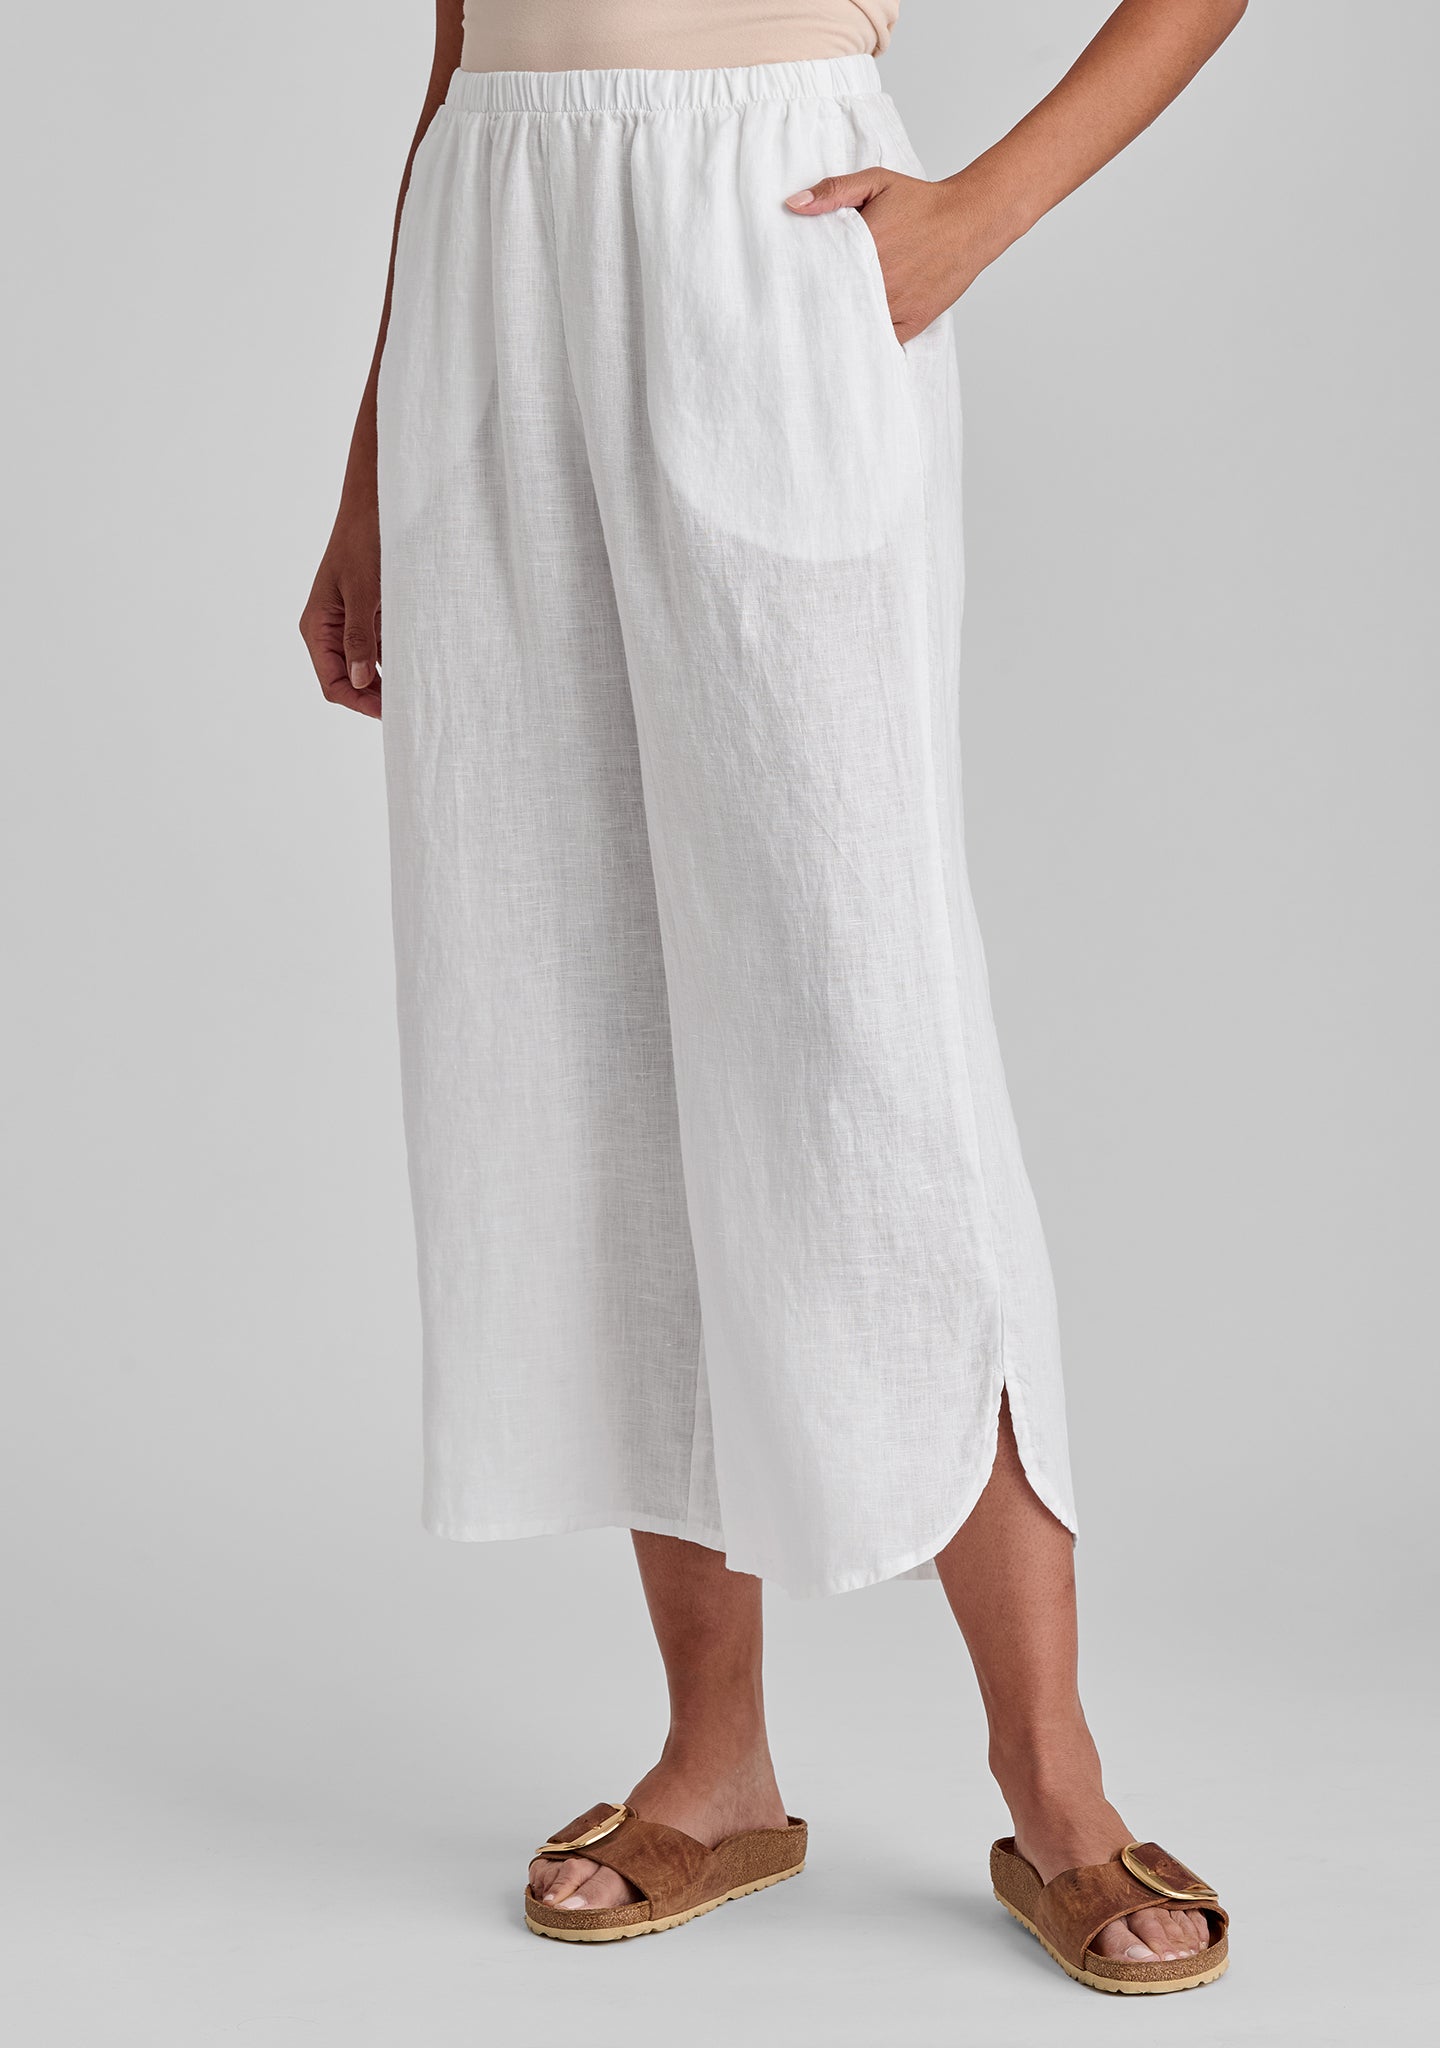 shirttail flood linen pants with elastic waist details